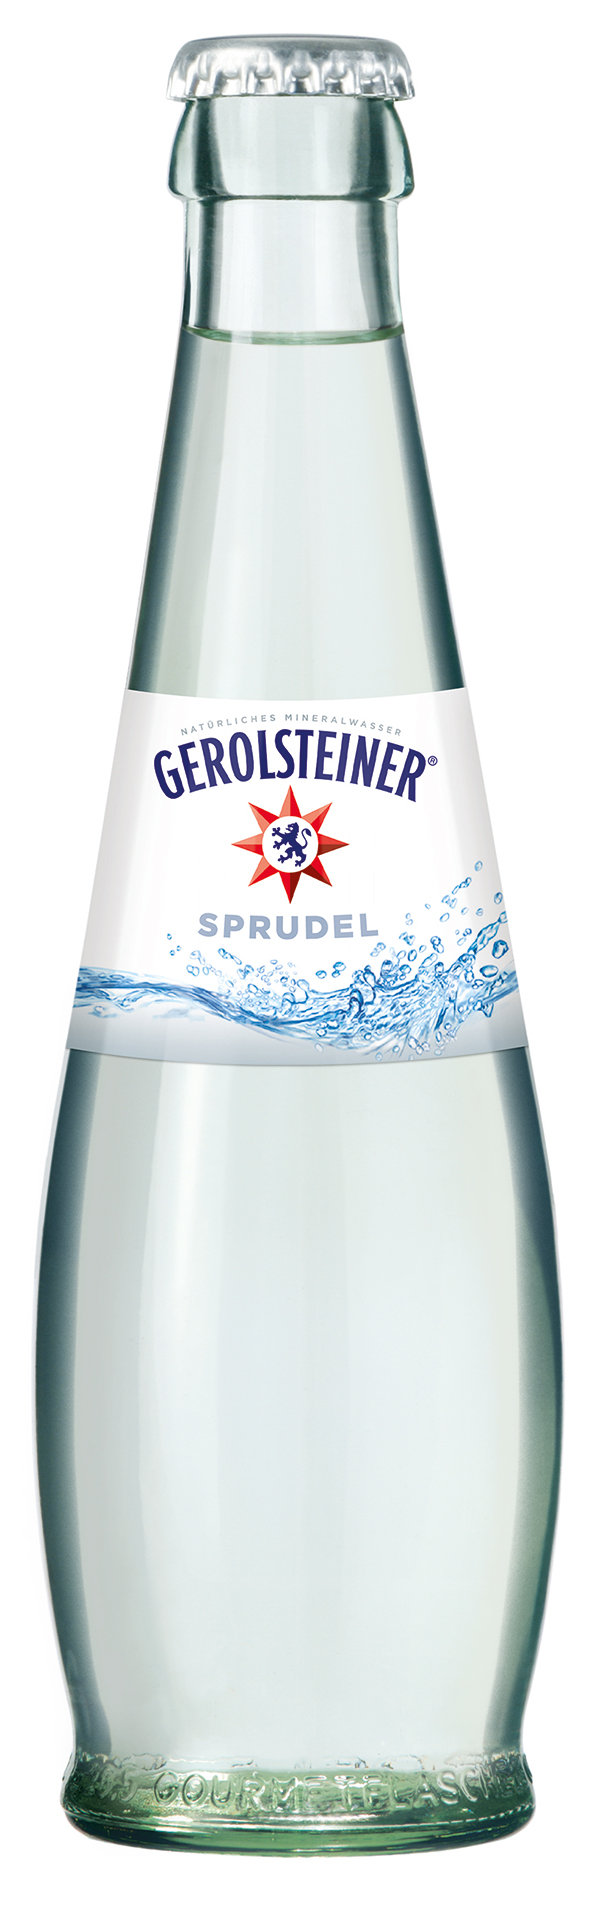 Gerolsteiner Sprudel Gourmet 24 x 0,25 l (Glas)